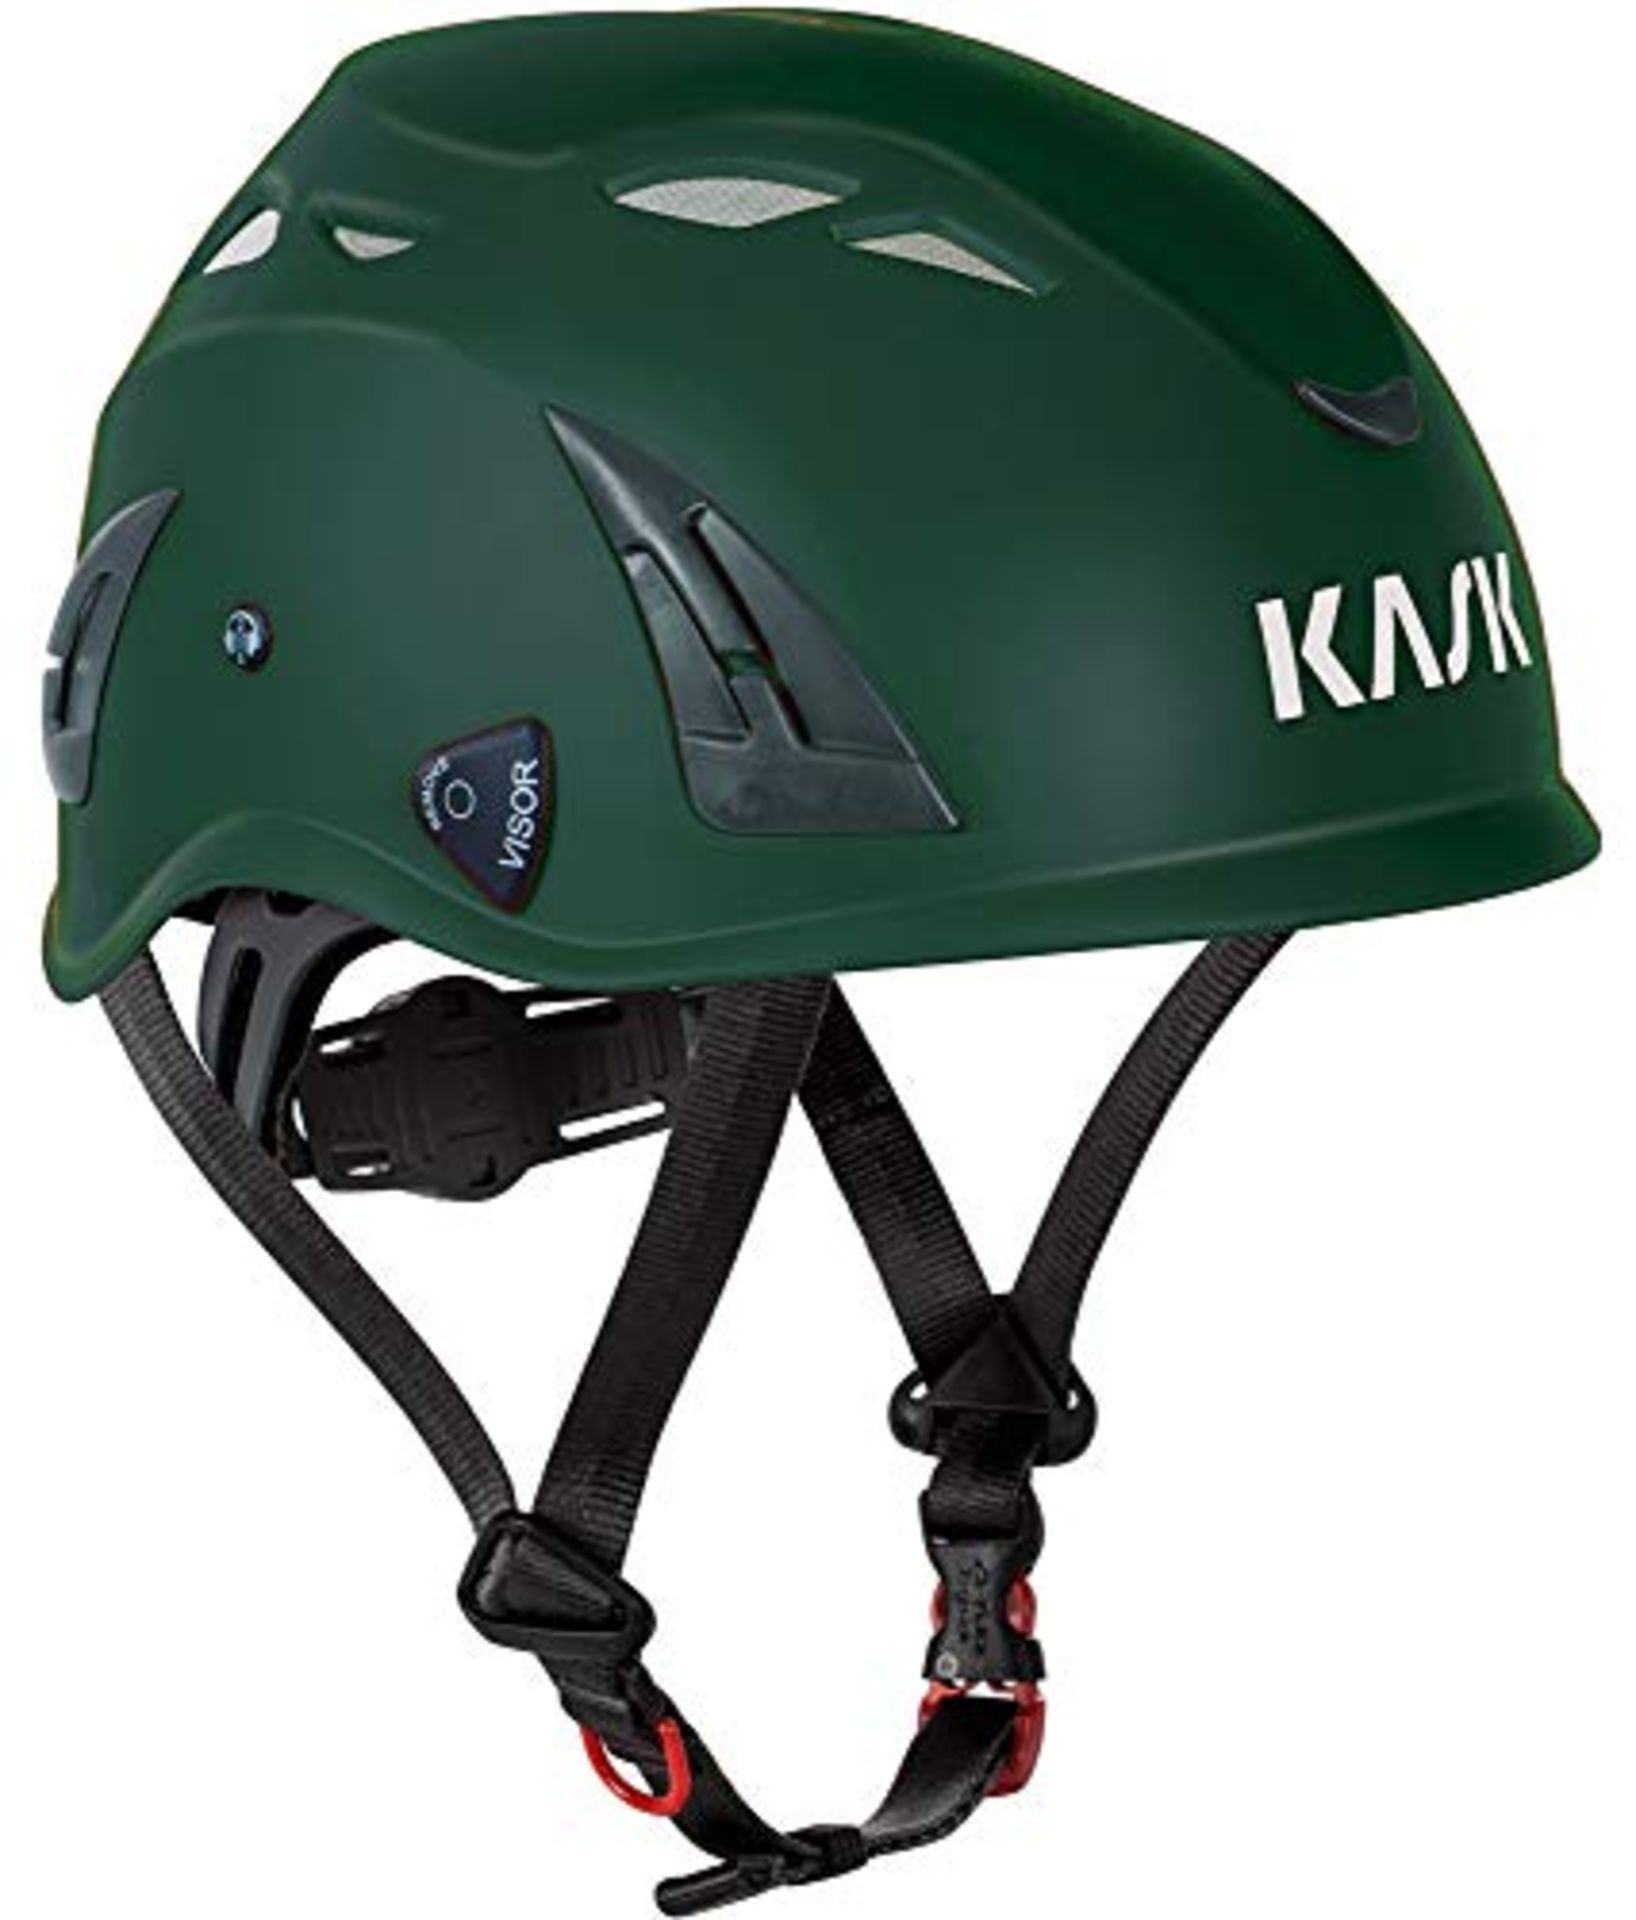 Kask WHE00008-206 Size 51-63 cm "Plasma AQ" Helmet - Dark Green